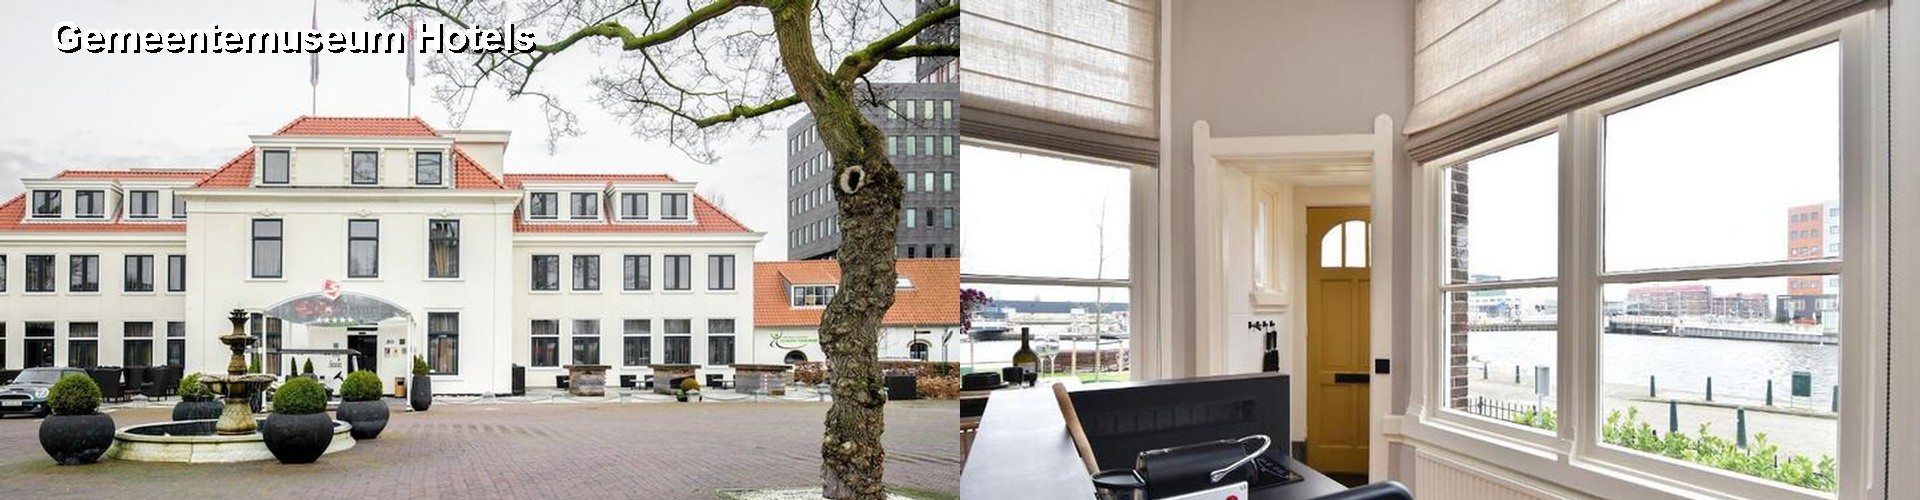 5 Best Hotels near Gemeentemuseum